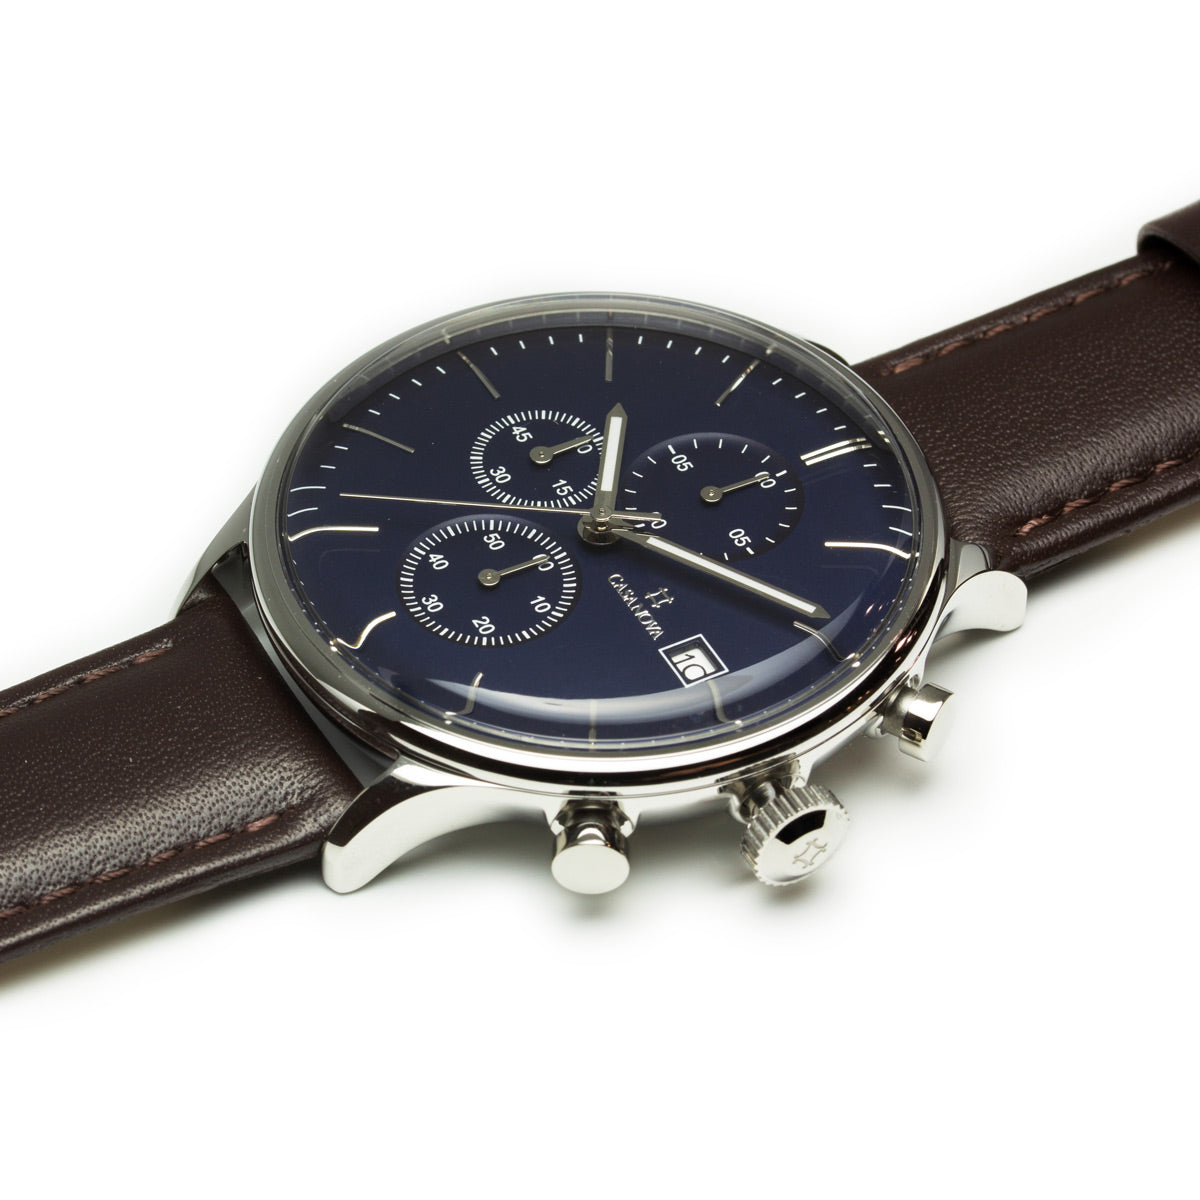 Reloj Elegante Silver Marrón con Dial Azul